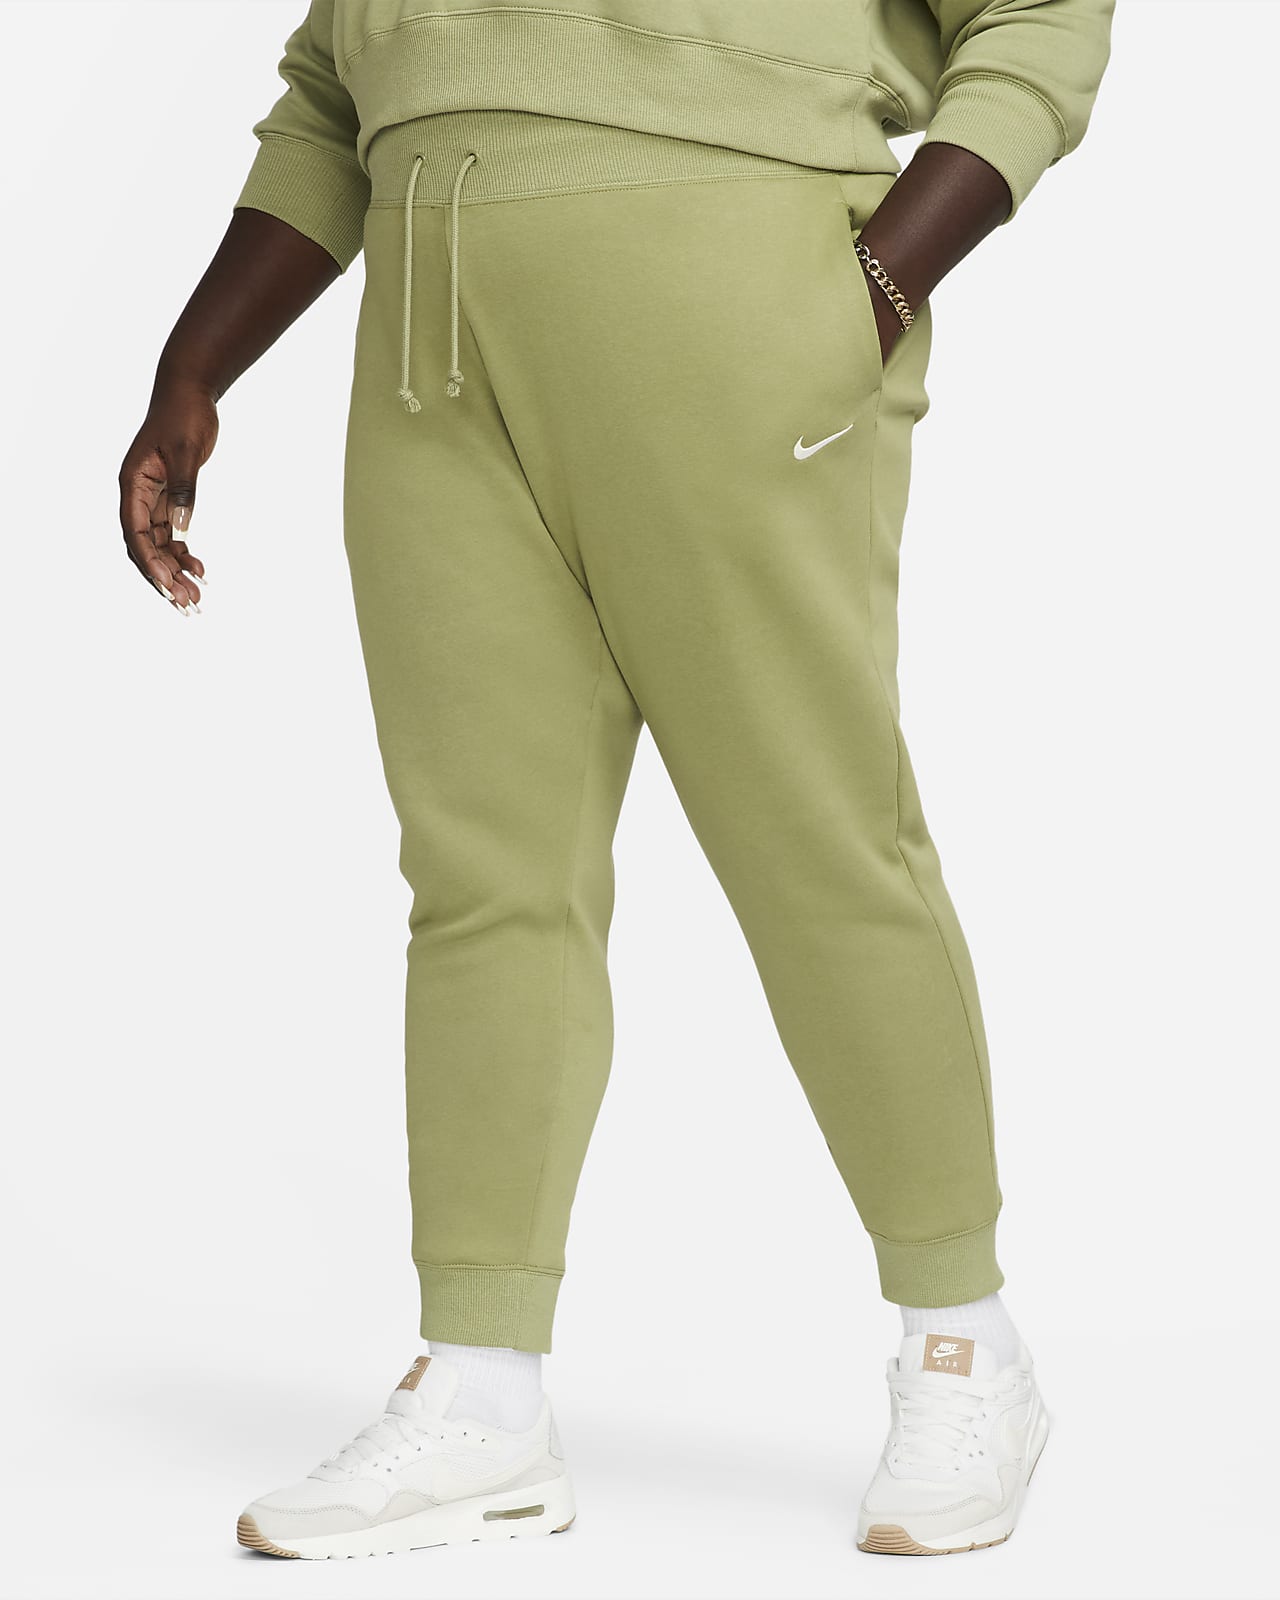 Women's Plus Size Golf Clothing. Nike LU